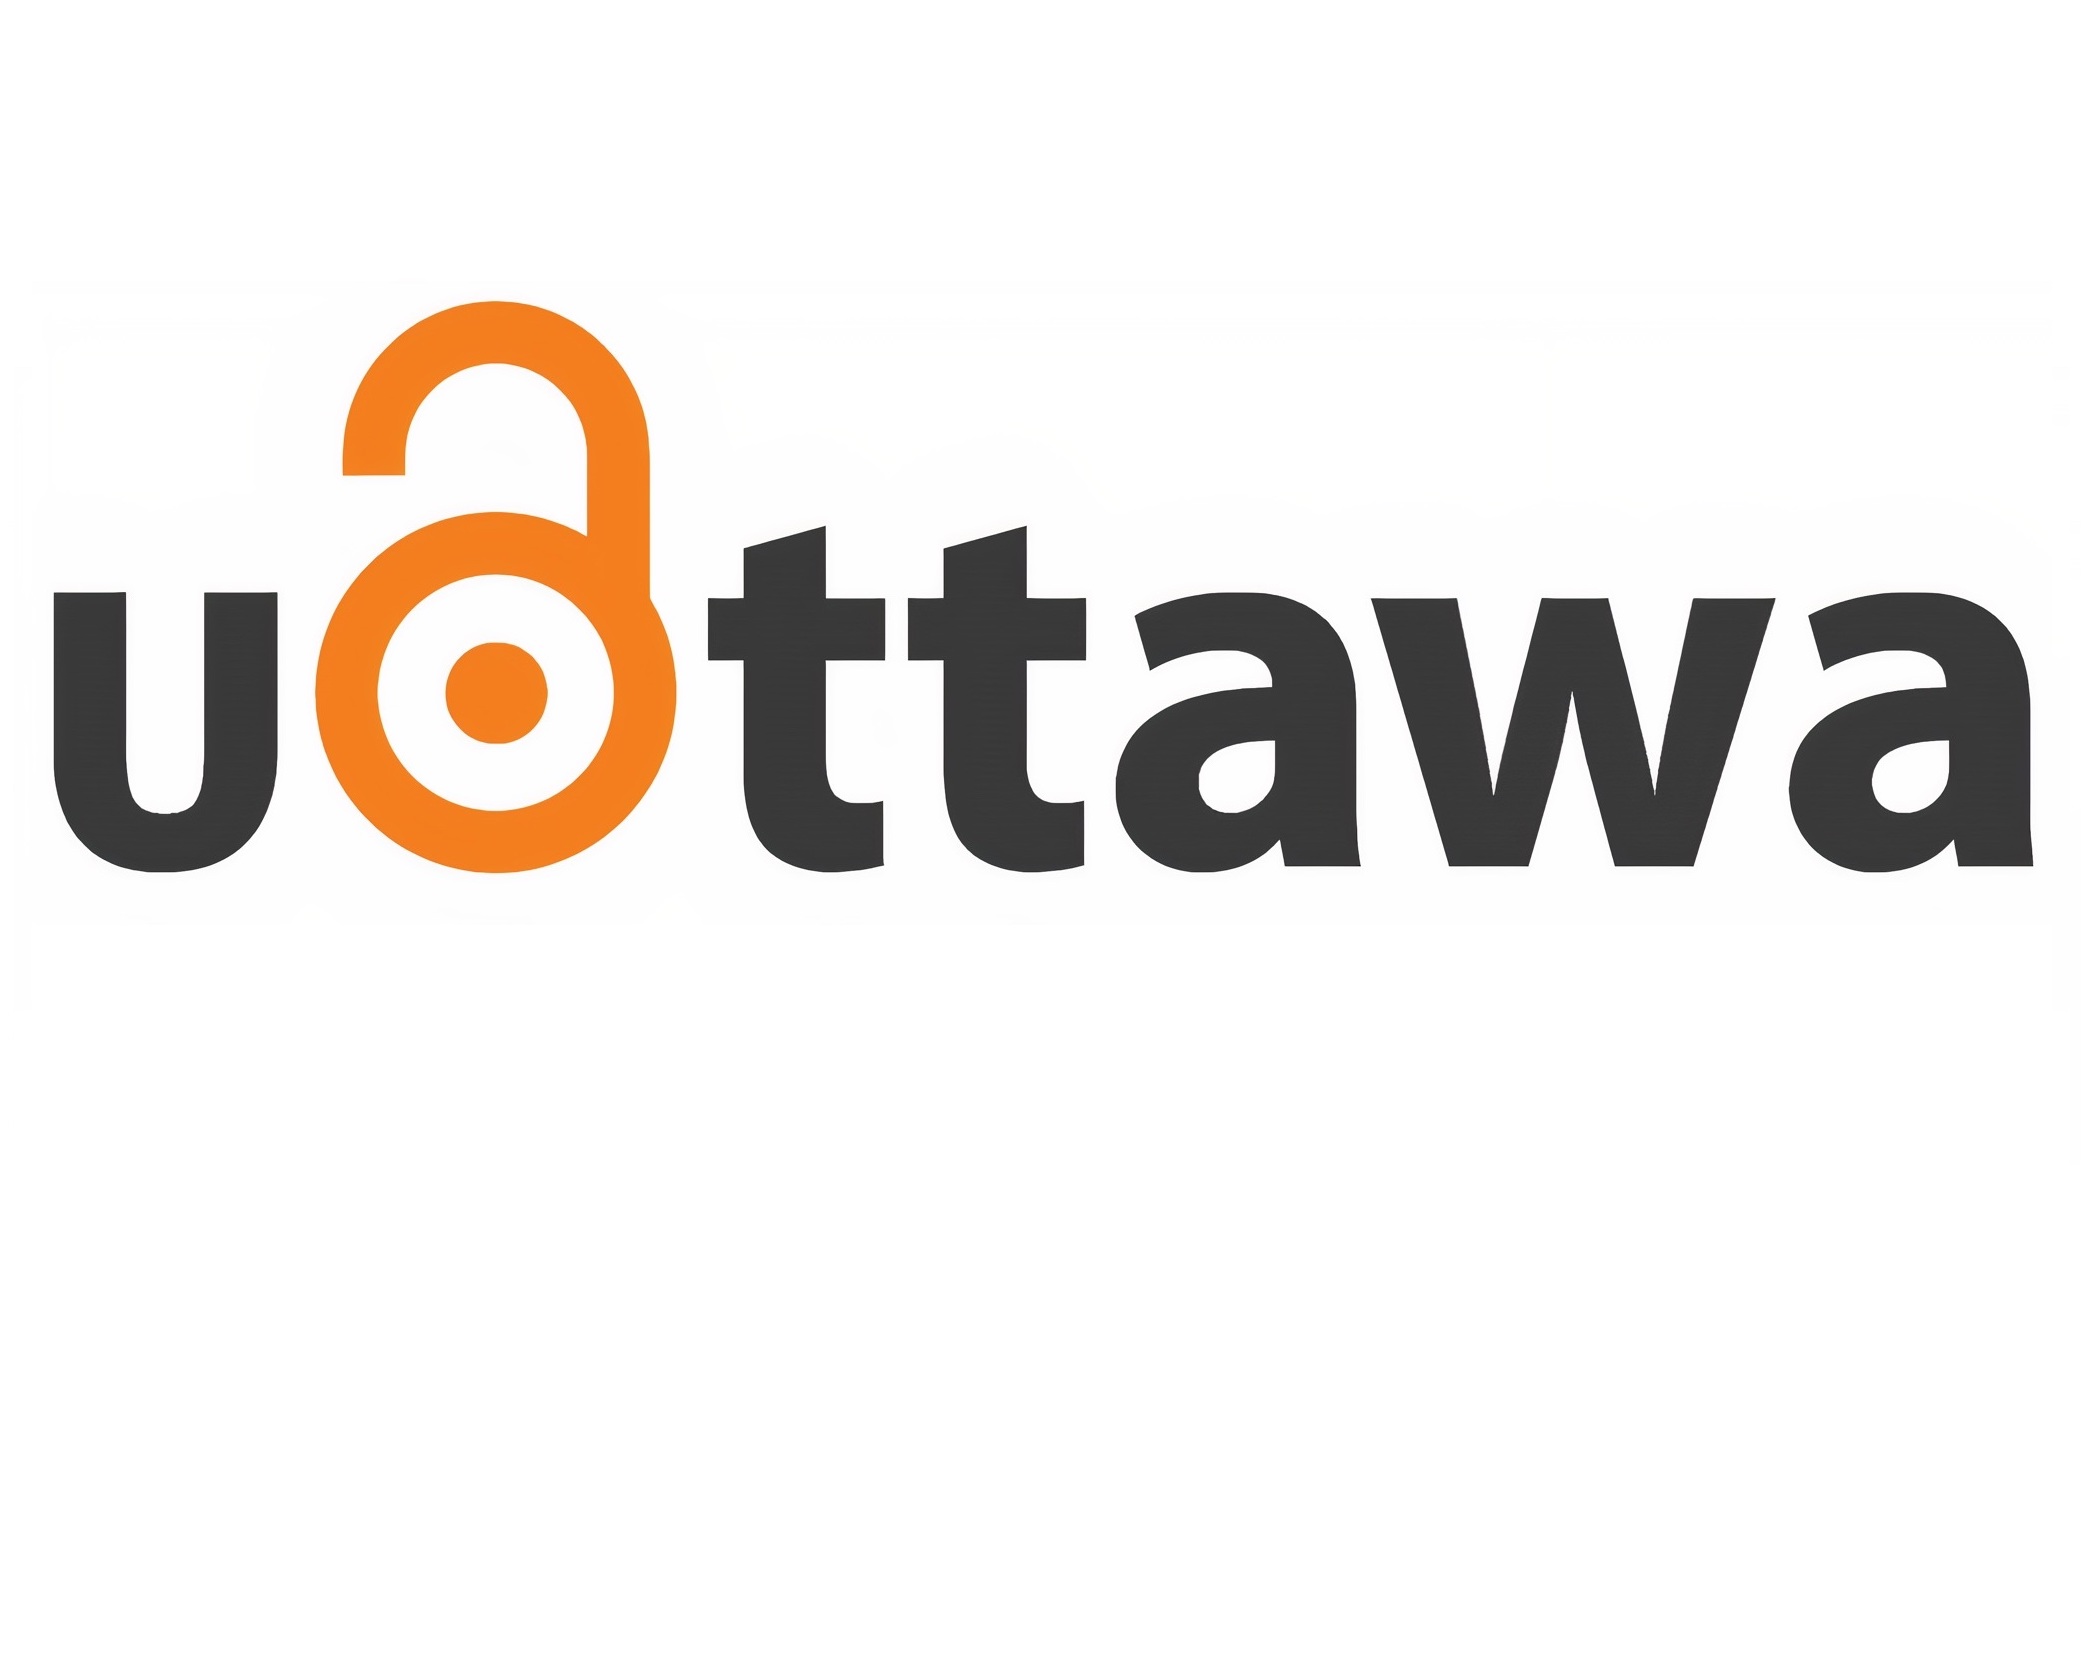 uOttawa with Open Access logo (an O shaped like a lock)